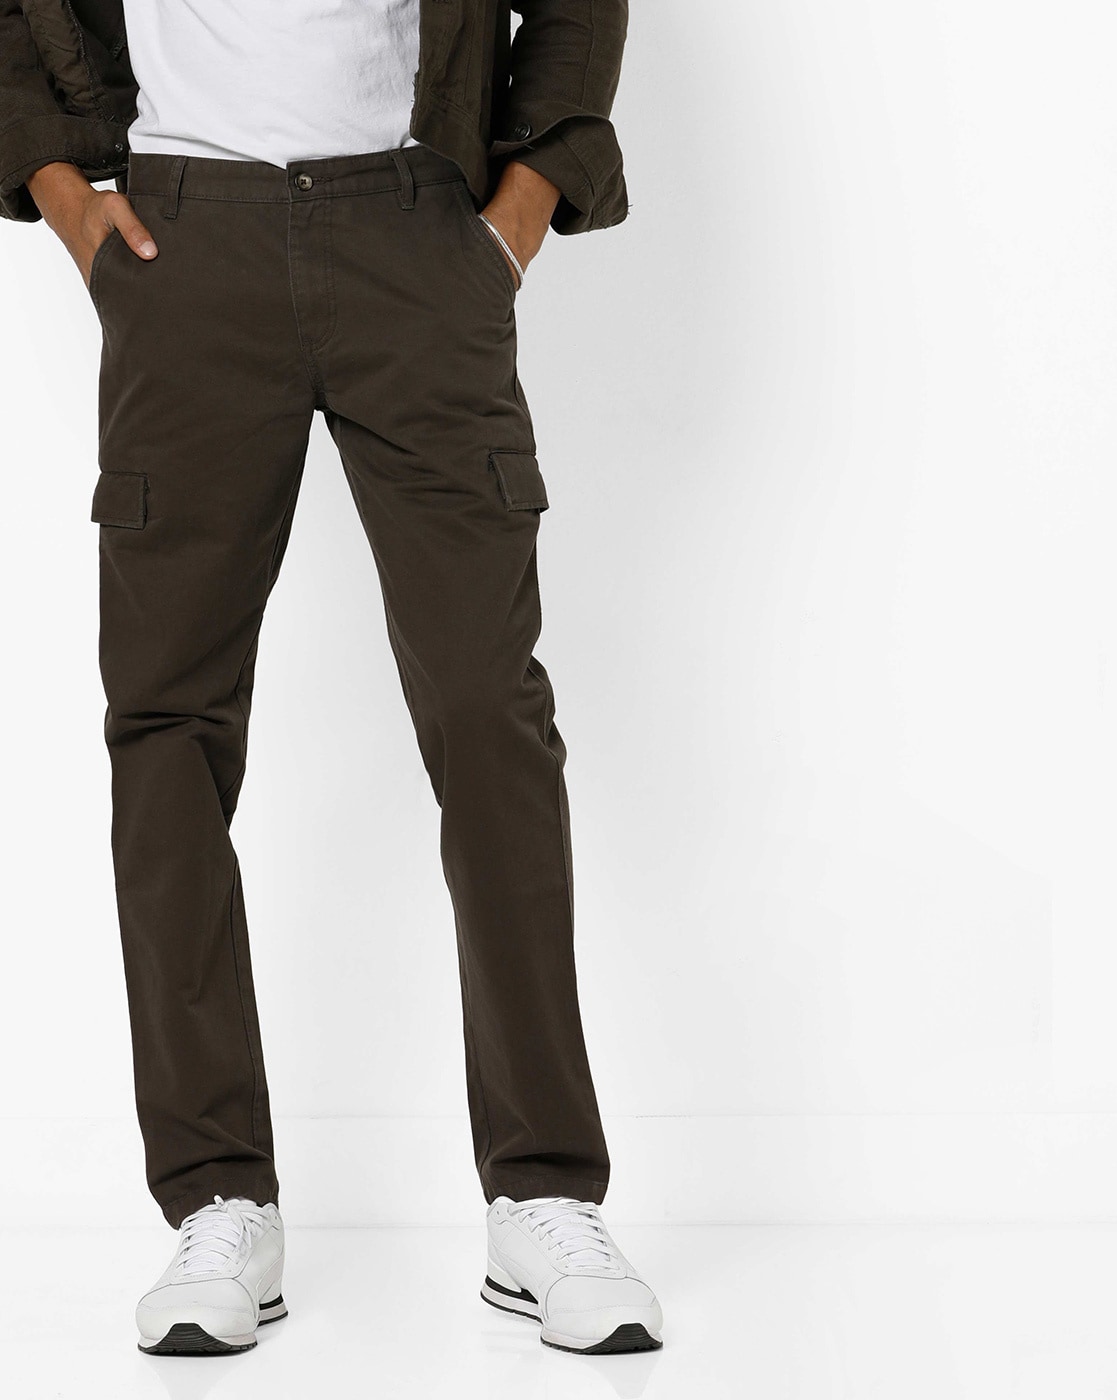 Buy Brown Trousers  Pants for Men by AJIO Online  Ajiocom